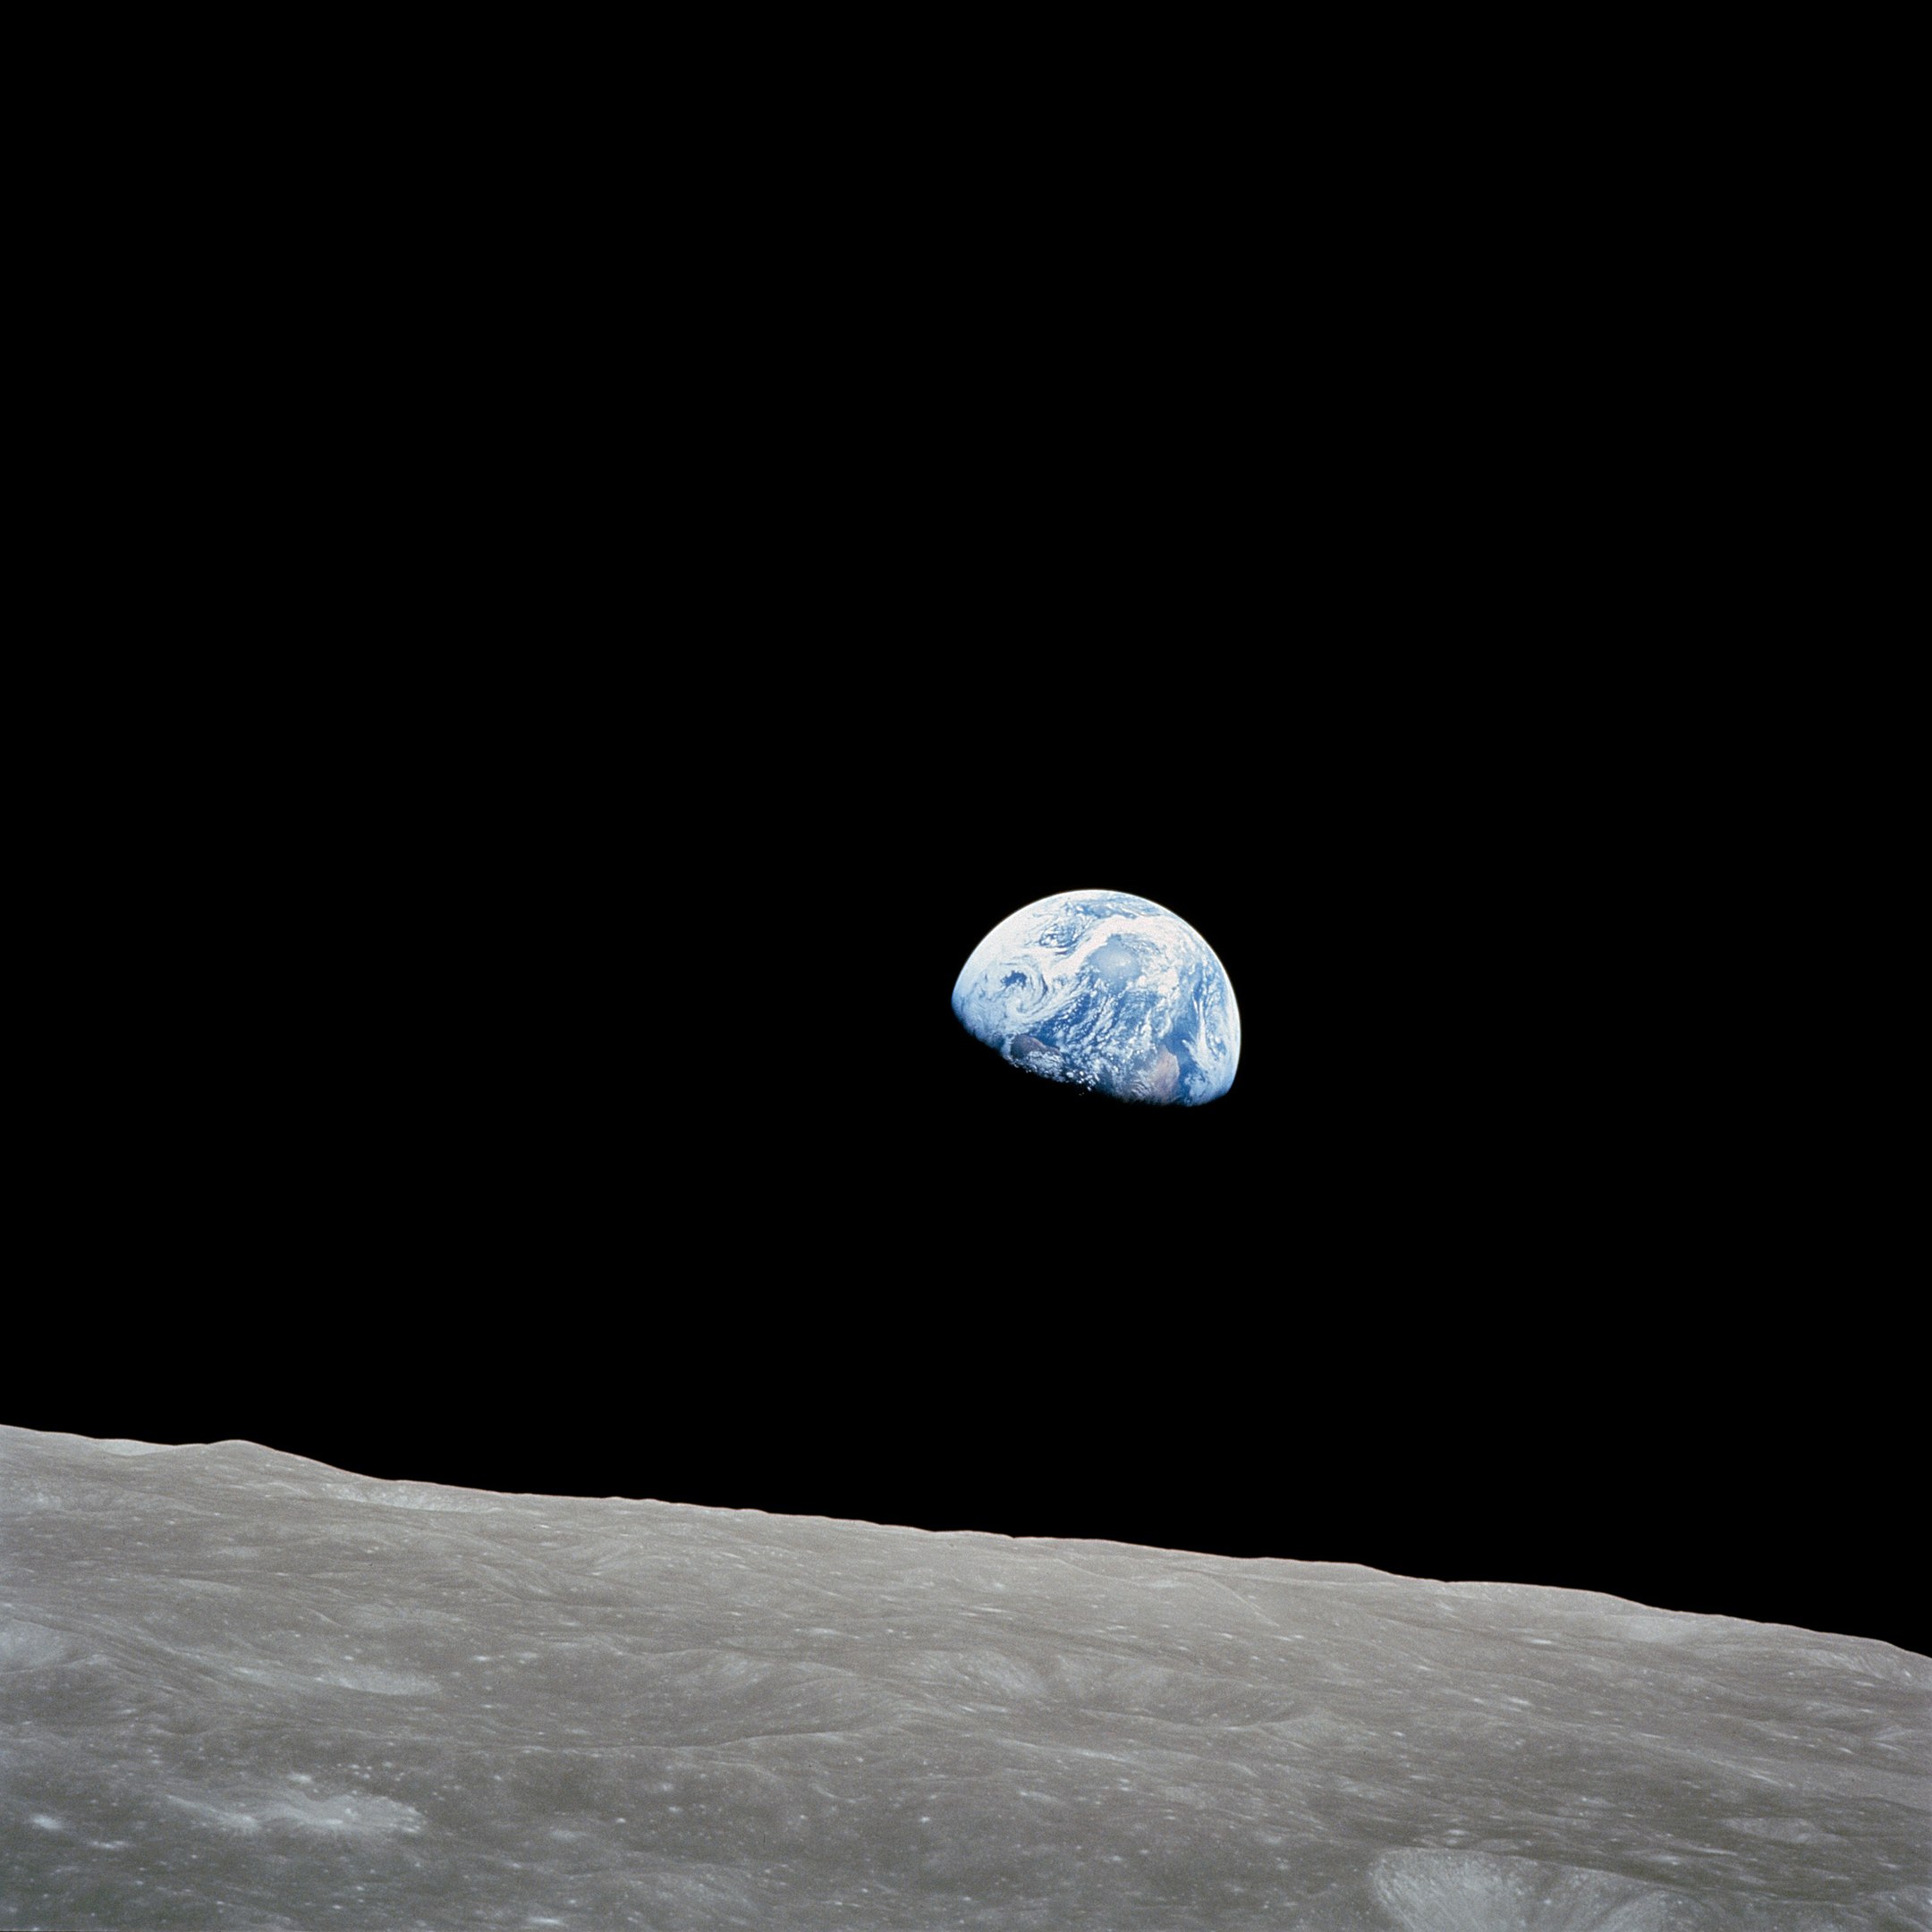 Foto: NASA/Bill Anders, public domain